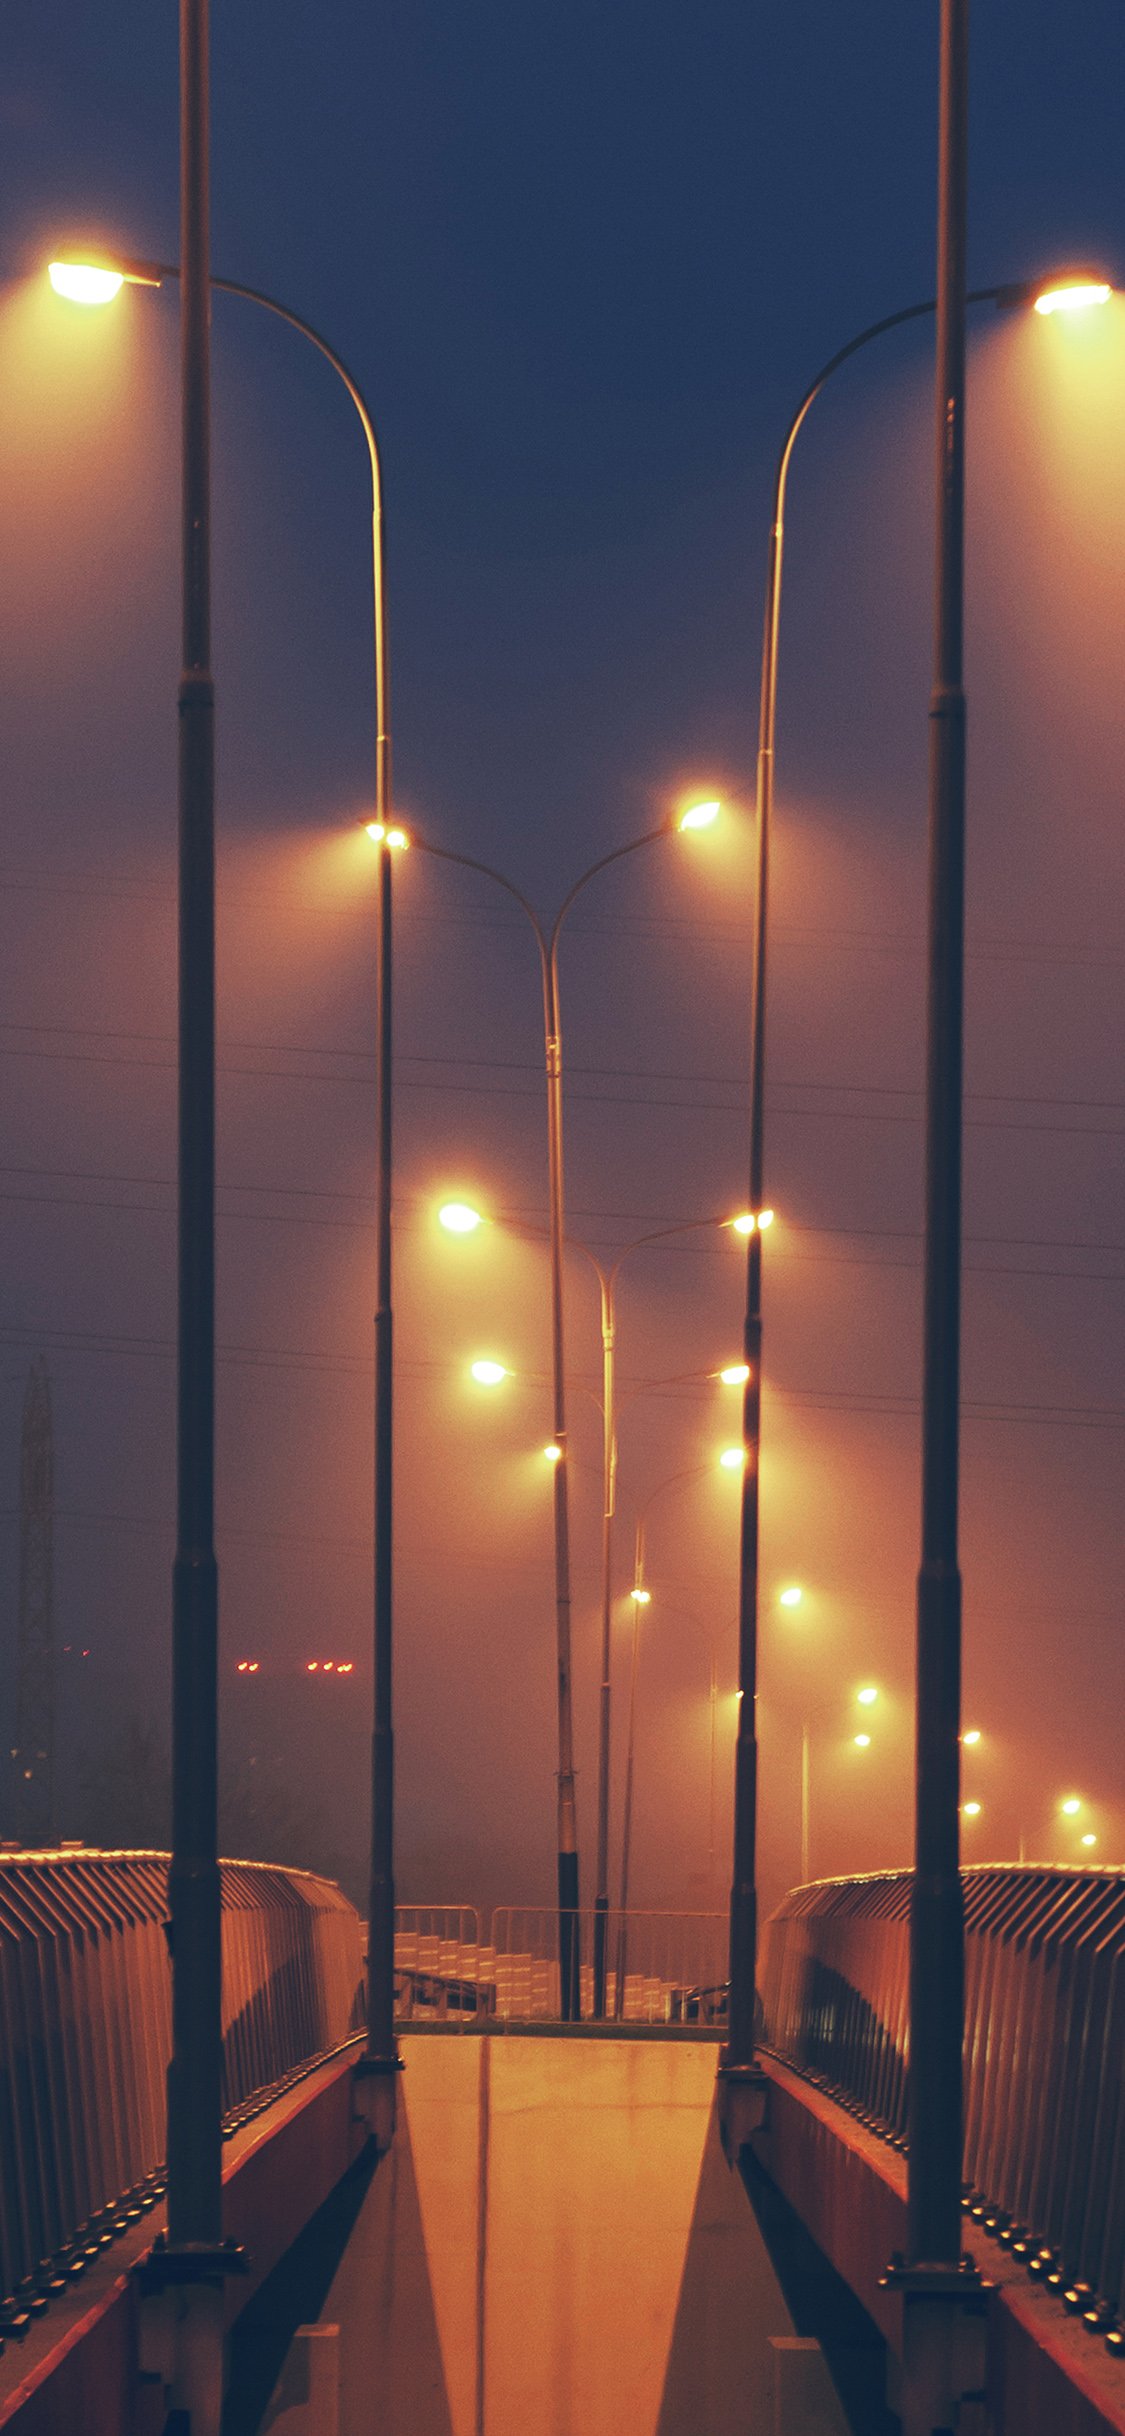 iPhone X wallpaper. night bridge city view lights street orange dark